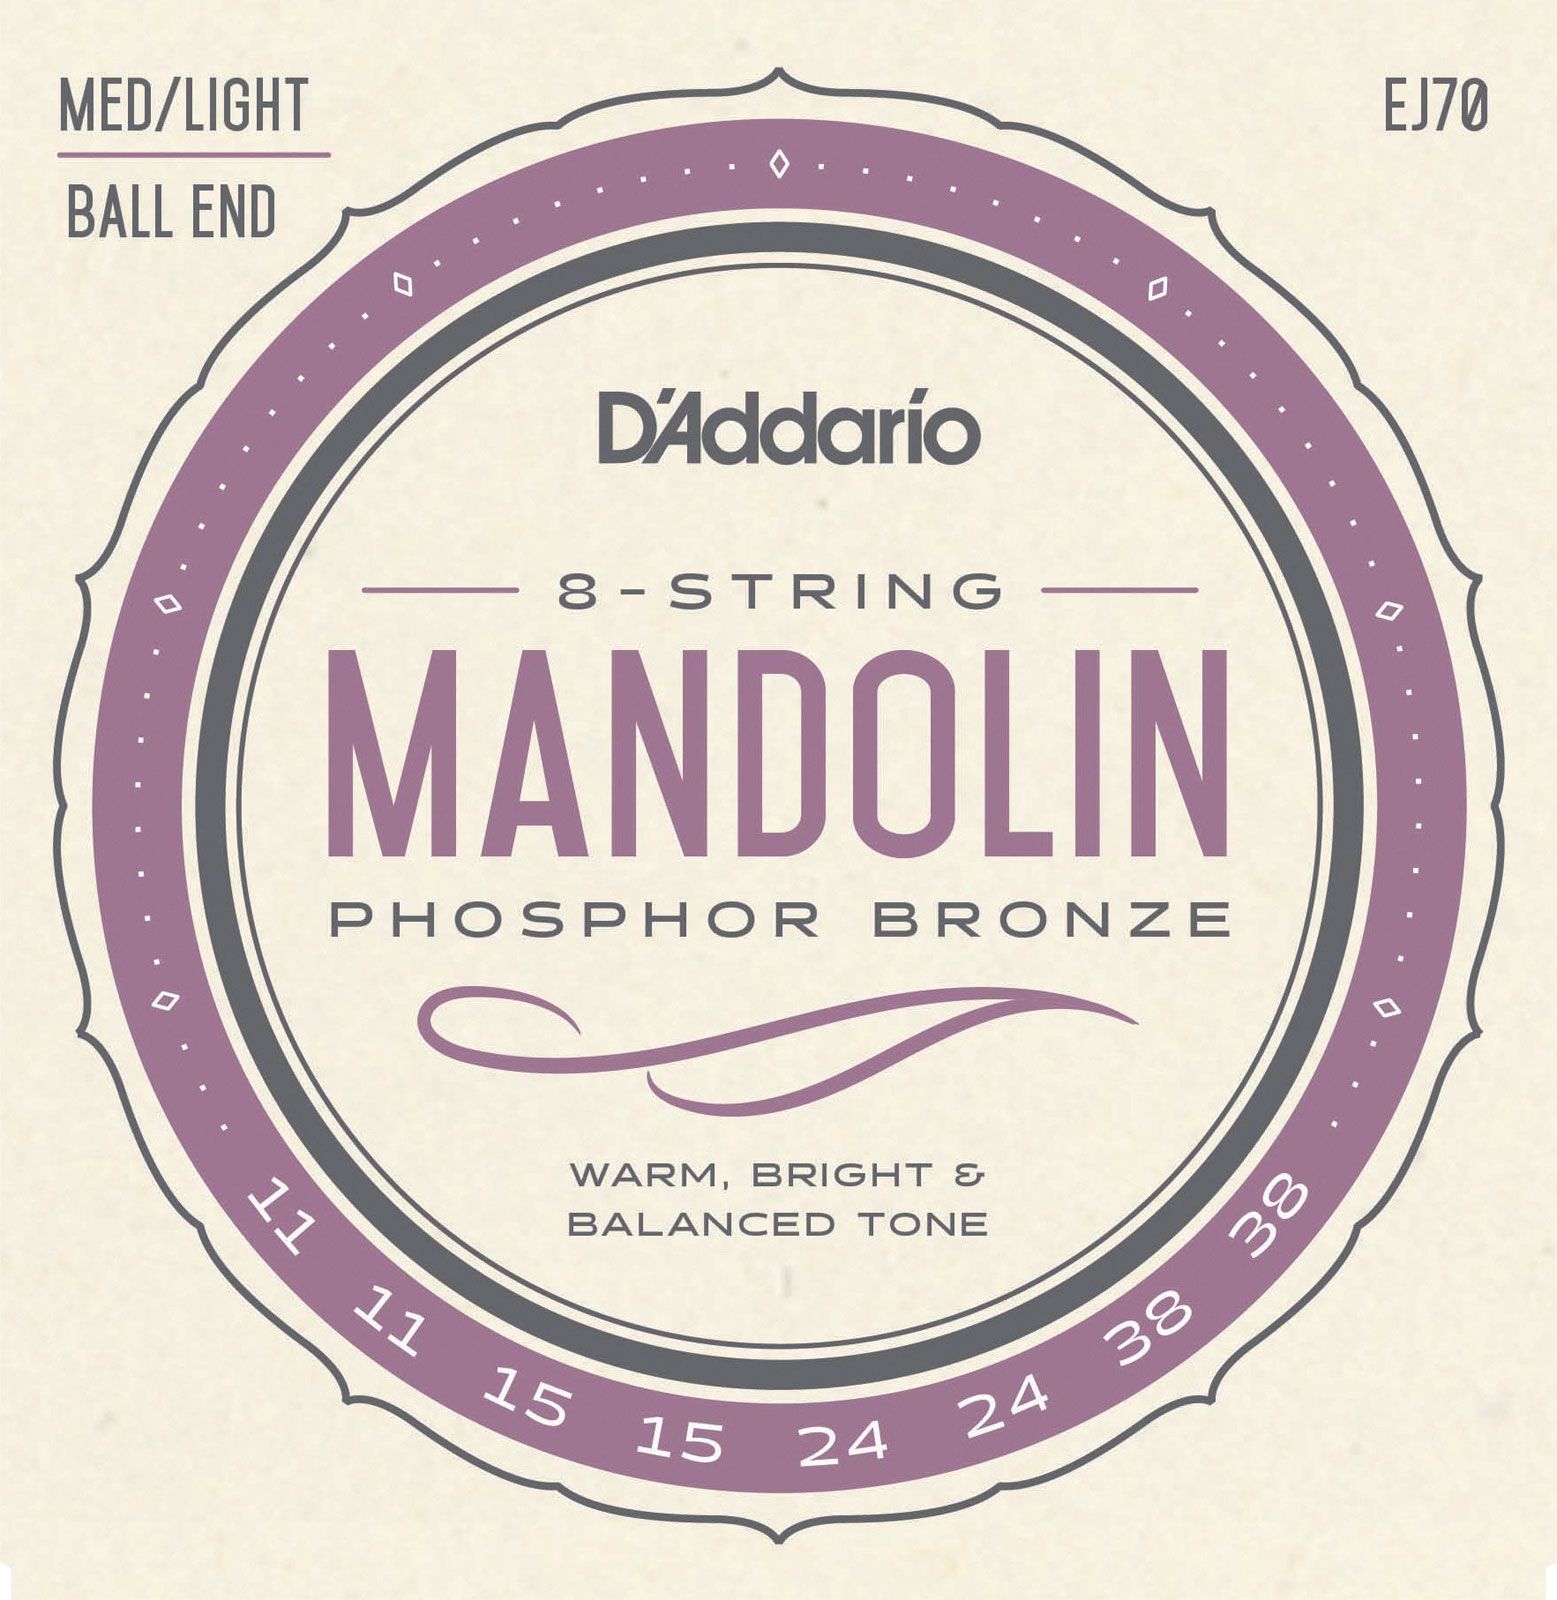 D'ADDARIO AND CO EJ70 PHOSPHOR BRONZE MANDOLIN STRINGS BALL END MEDIUM/LIGHT 11-38